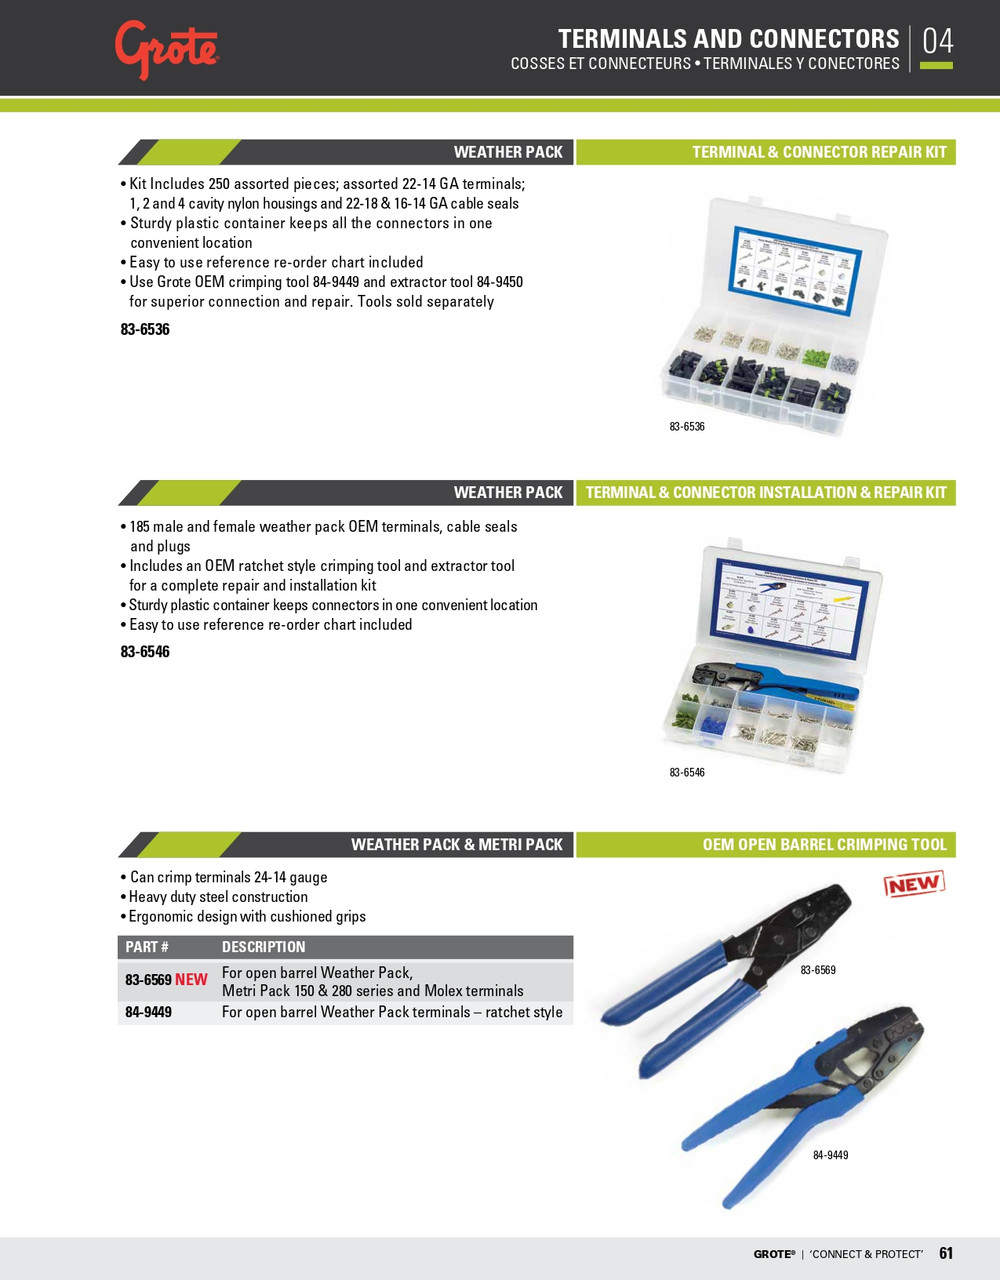 24 - 14 AWG Deutsch & Weather Pack Tool Weather Pack Metri Pack 150 & 280 Series & Molex Terminals - Blue  83-6569